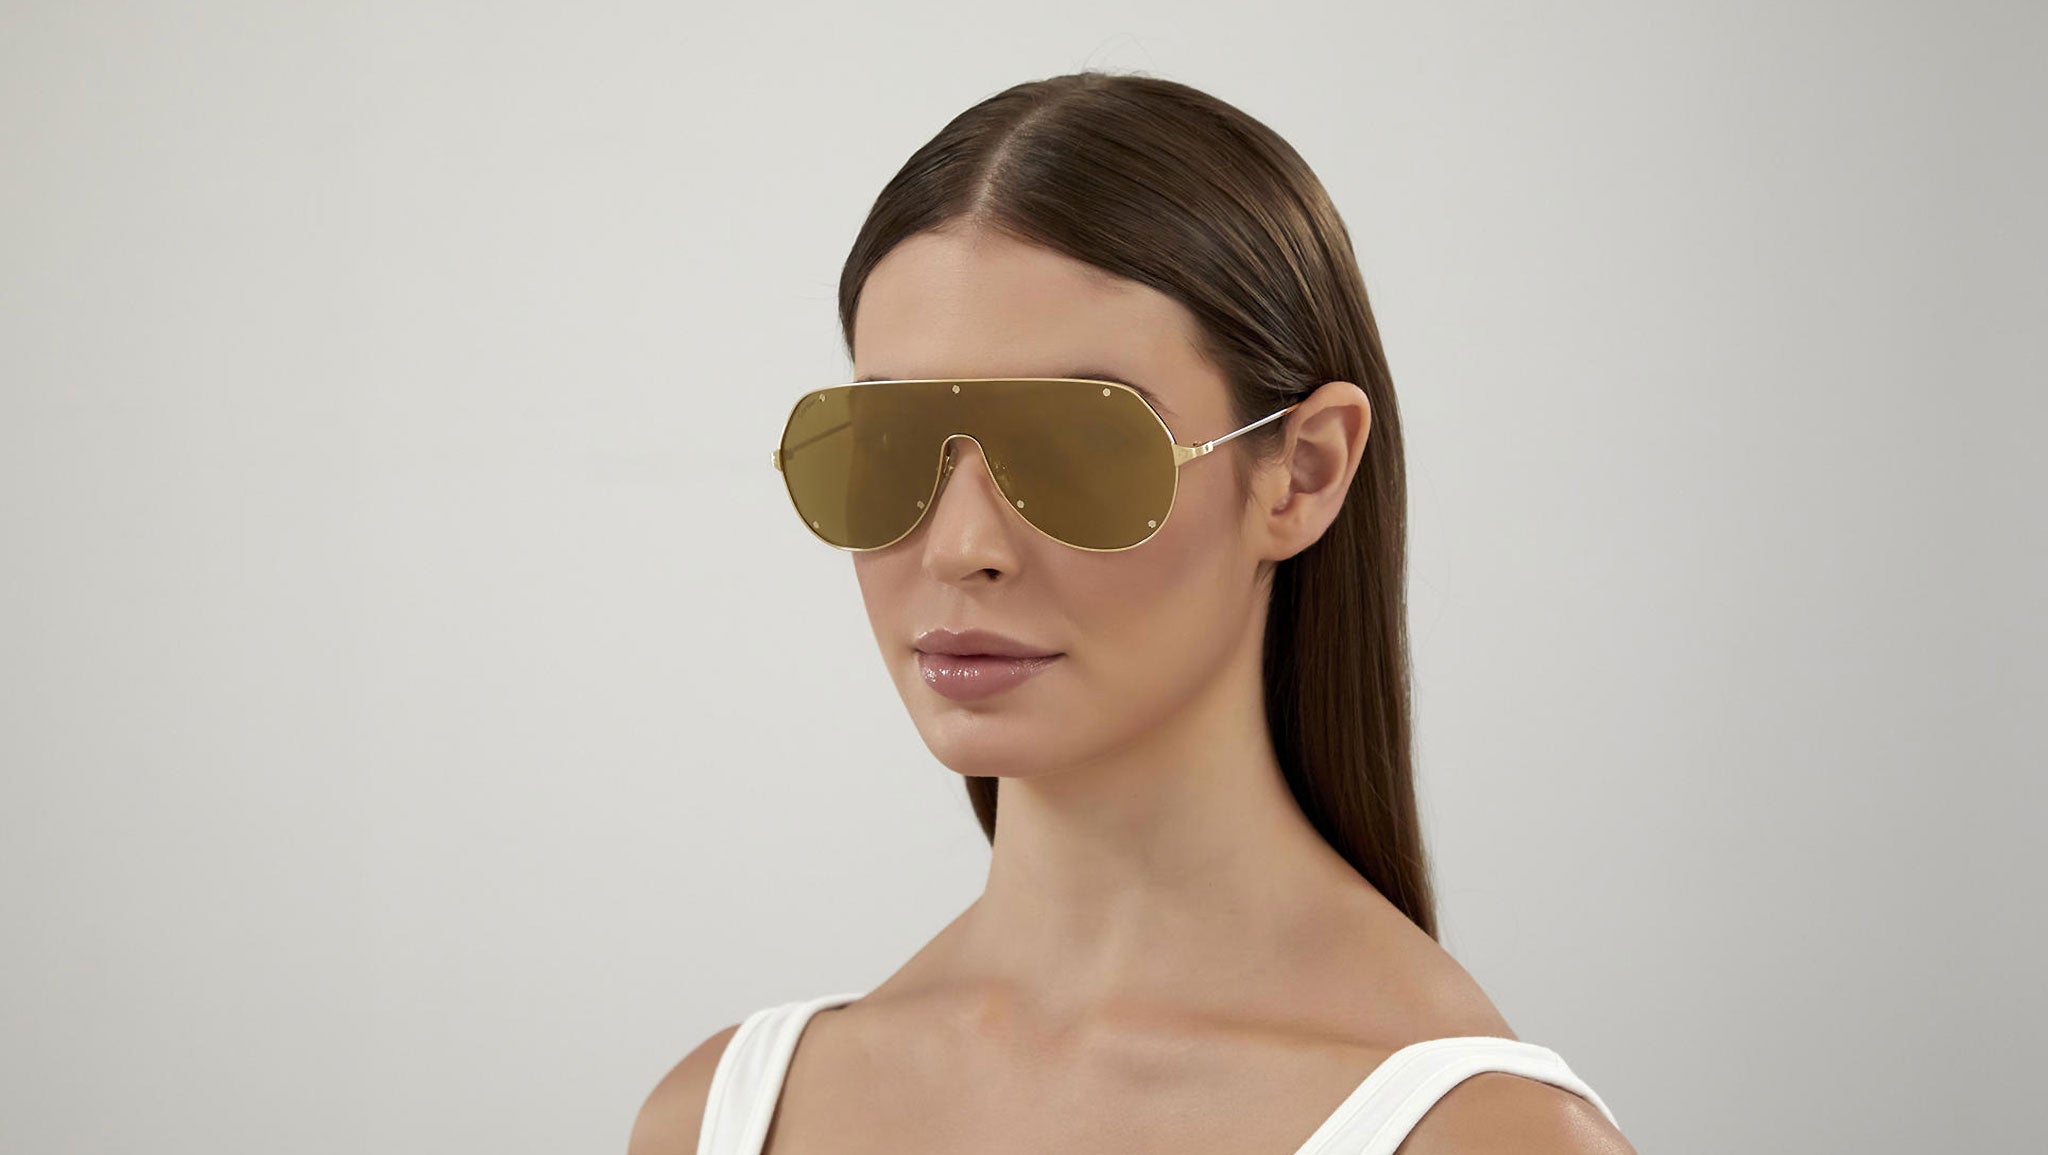 The Best Sunglasses For 2021 | Trending sunglasses, Sunglasses, Innovative  fashion